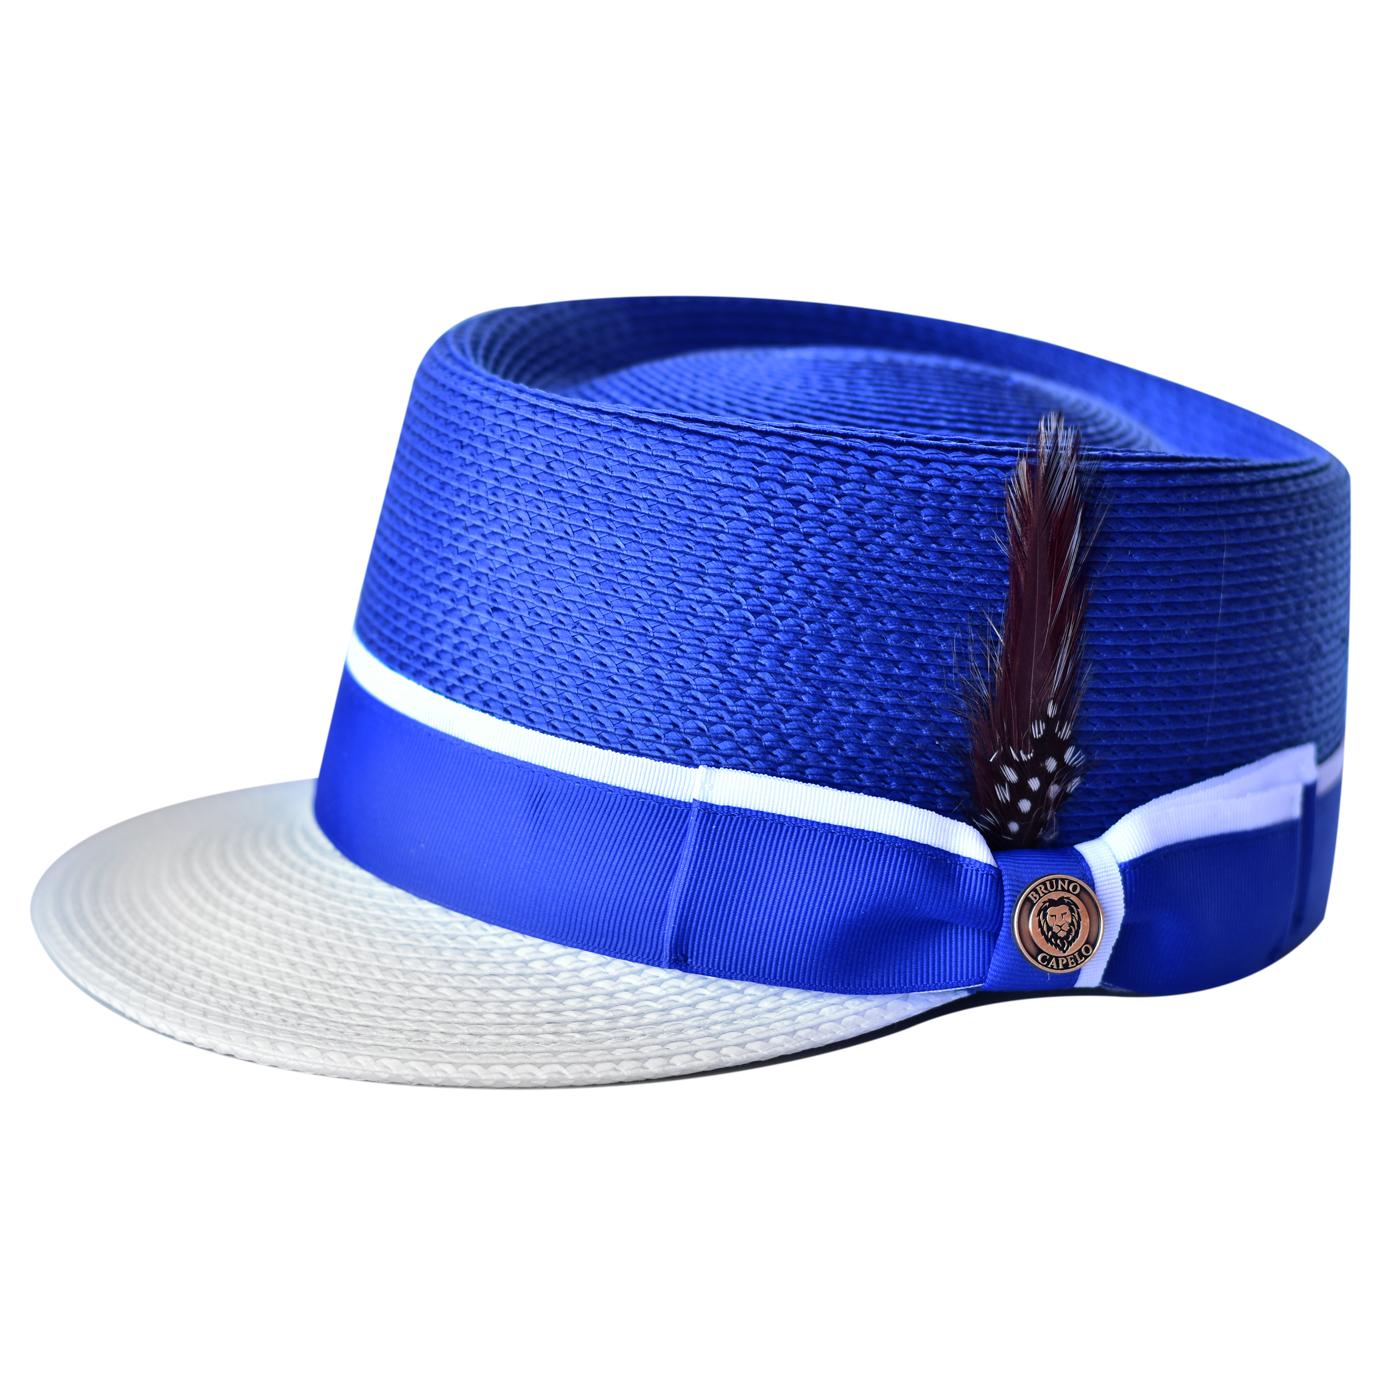 Bruno Capelo Royal Blue / White Braided Straw Telescope Baseball Hat LG-222  - $49.90 :: Upscale Menswear